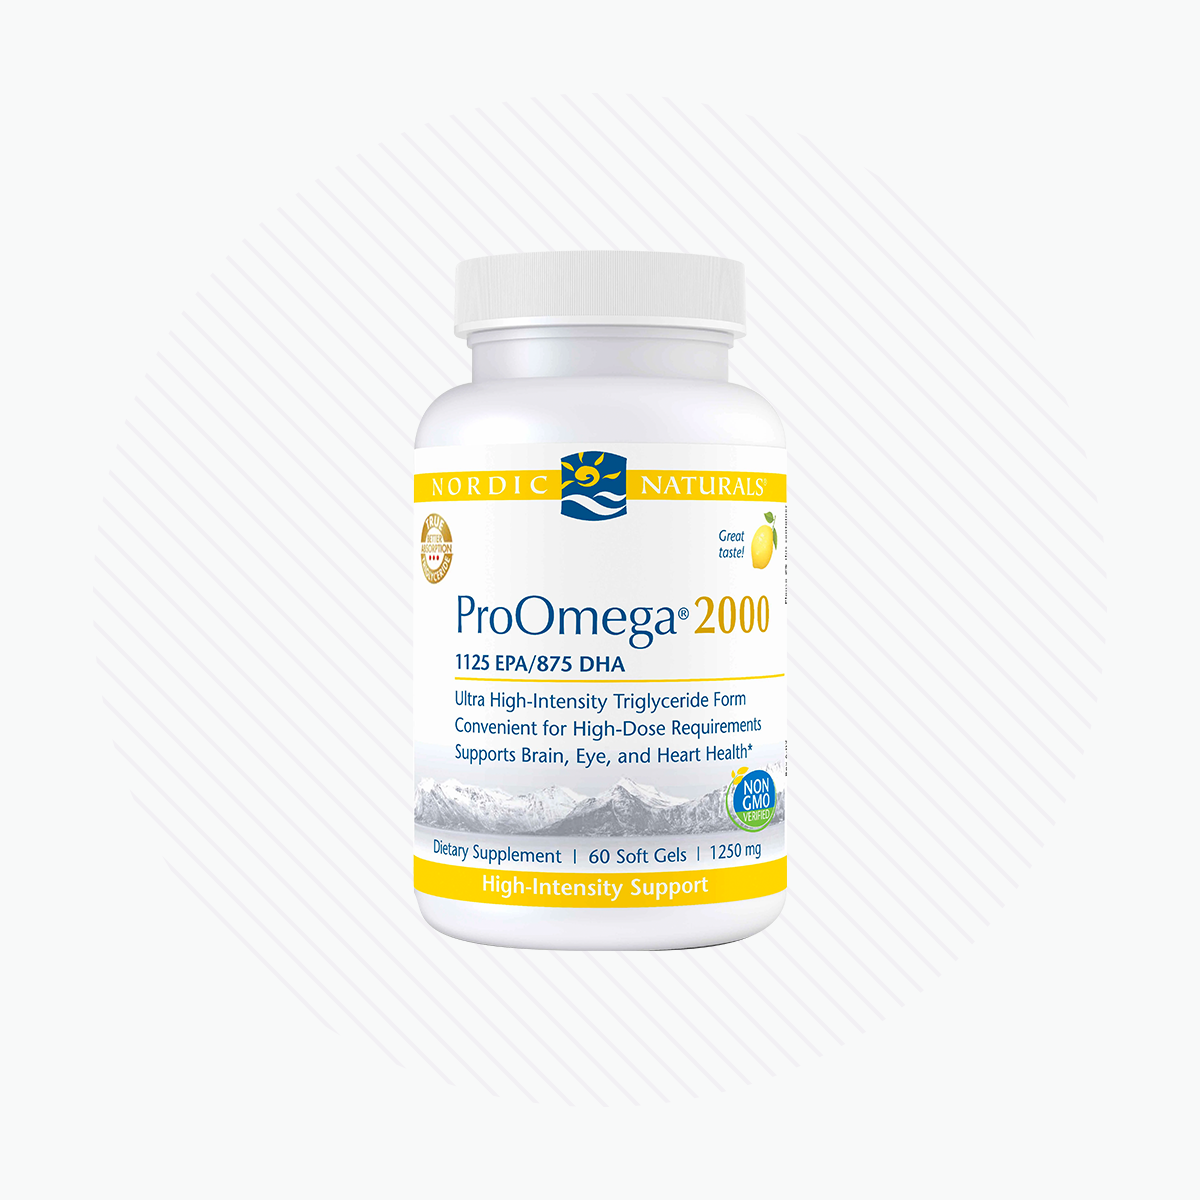 Nordic Naturals ProOmega 2000, Lemon Flavor - 2150 mg Omega-3 Soft Gels - Ultra High-Potency Fish Oil